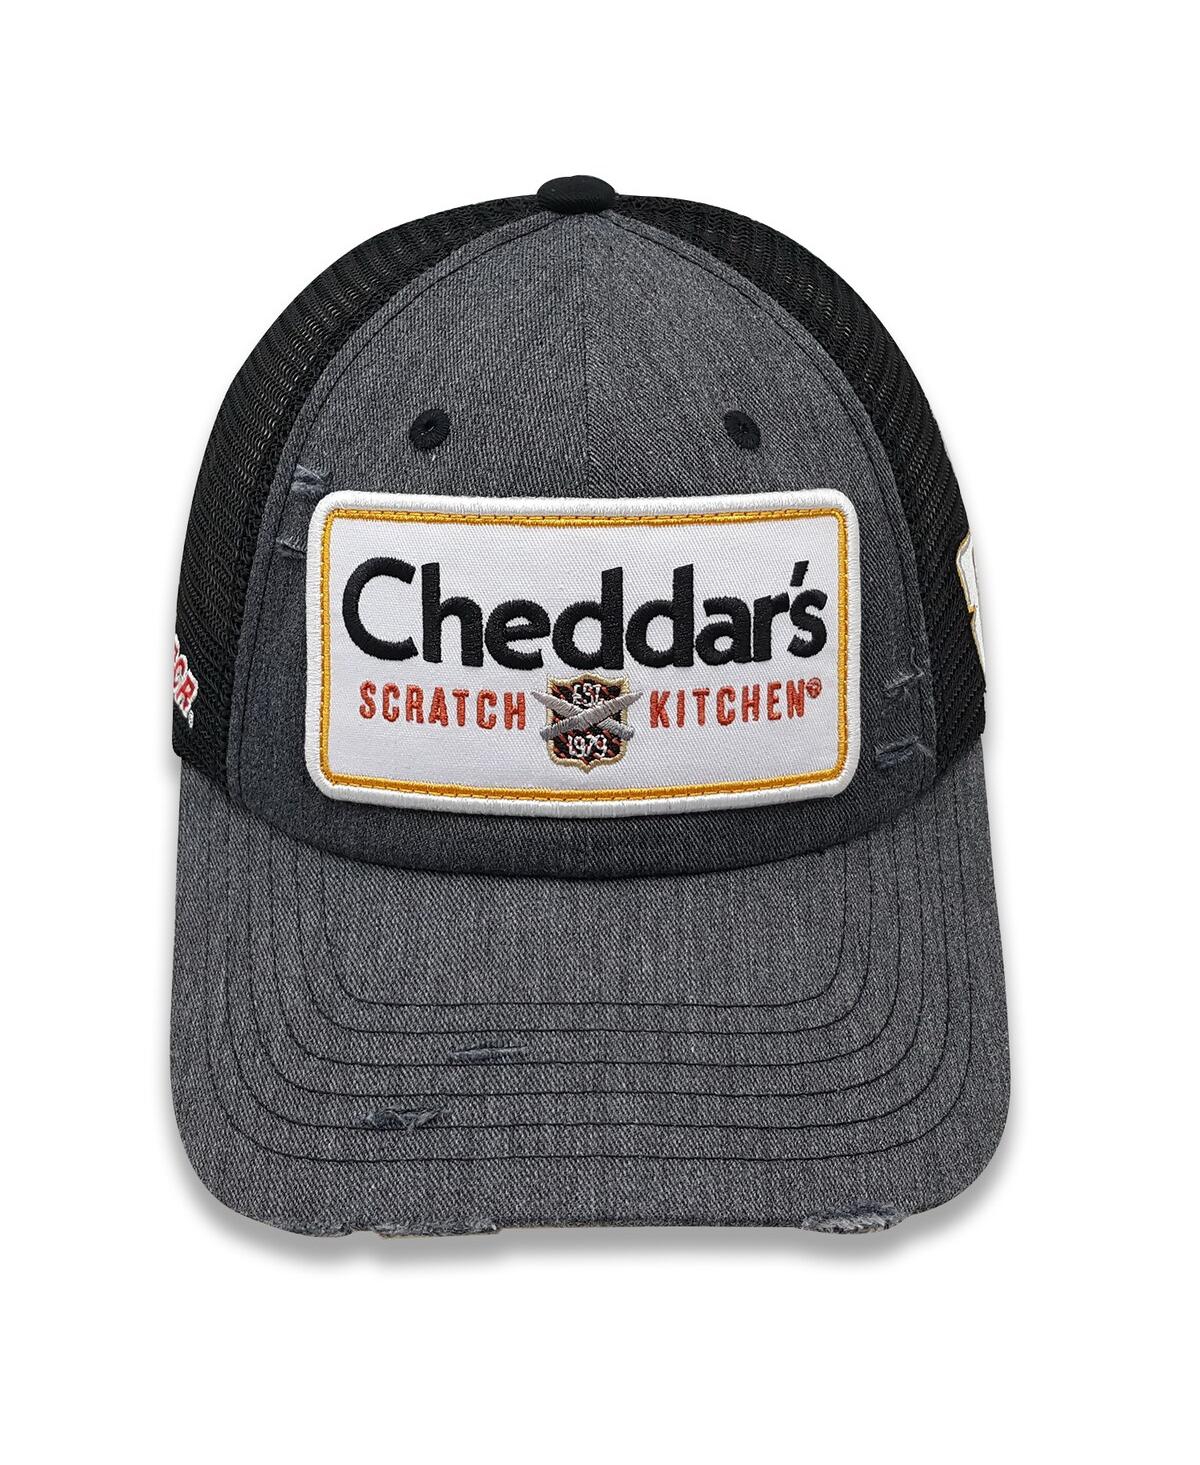 Men's Richard Childress Racing Team Collection Gray, Black Kyle Busch Cheddar's Retro Patch Adjustable Hat - Gray, Black